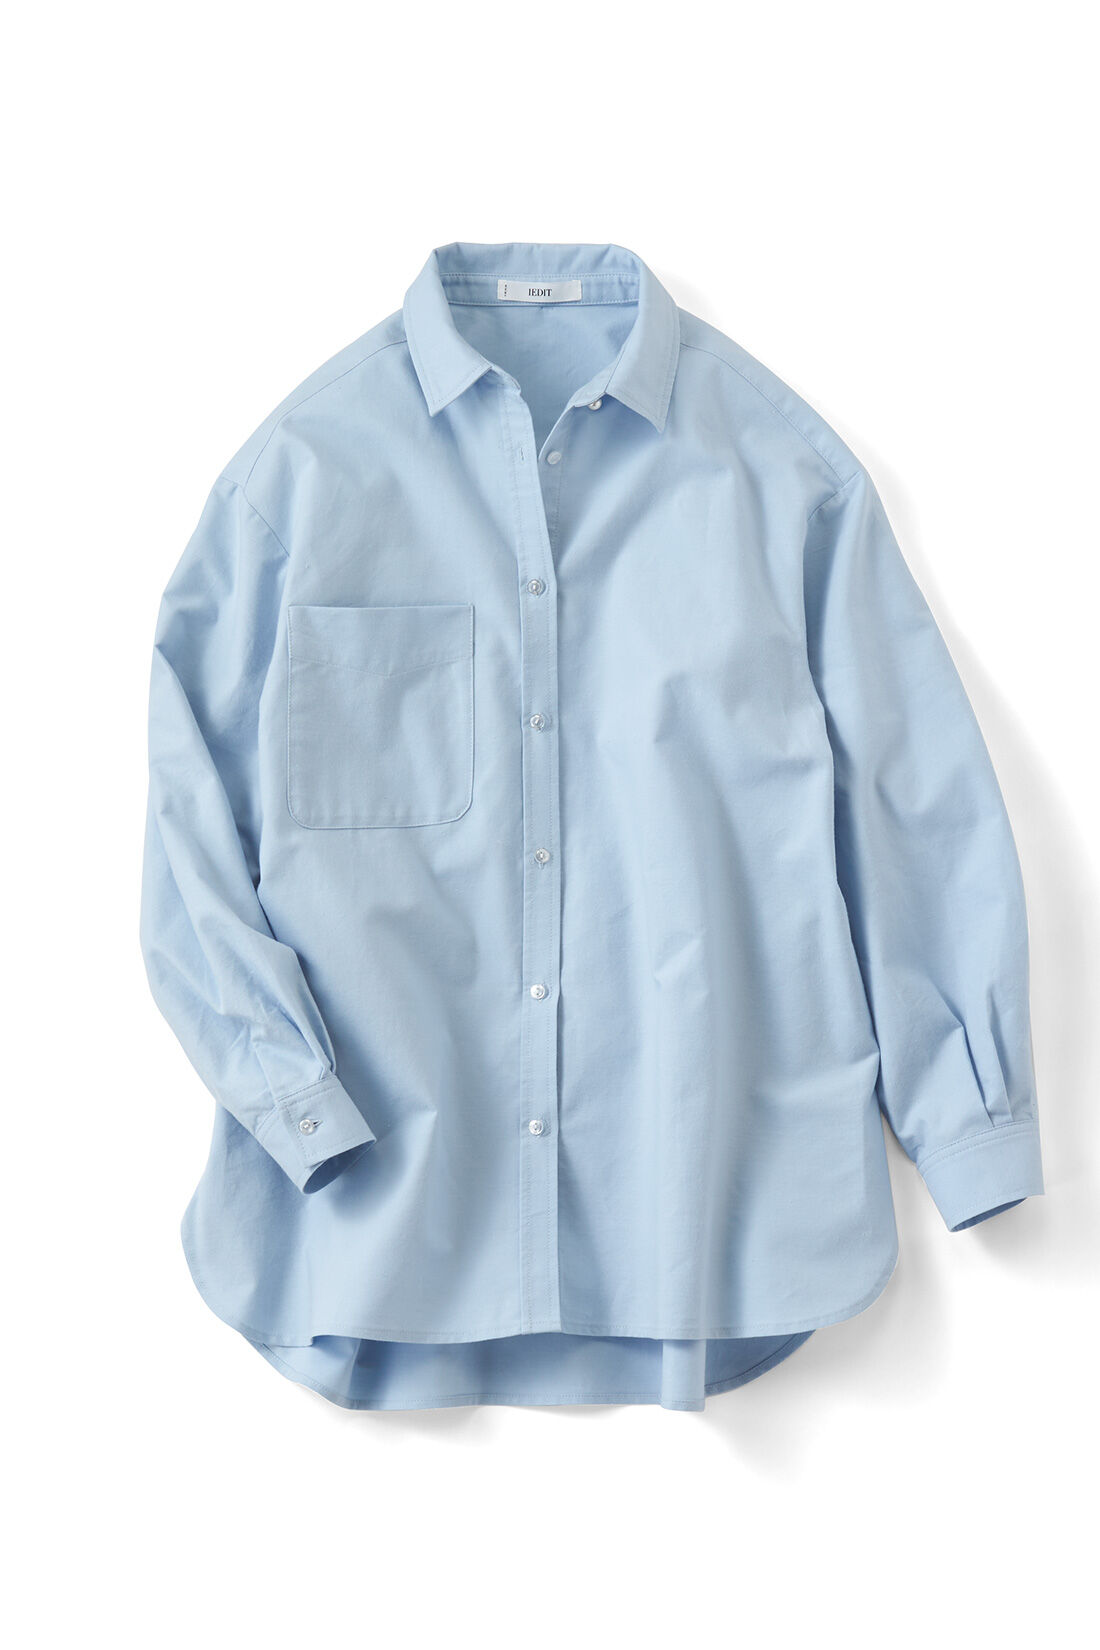 IEDIT[イディット]　バックフレアーデザインがきいた オックスフォード素材のこなれ見えシャツ〈パープル〉|ブルー